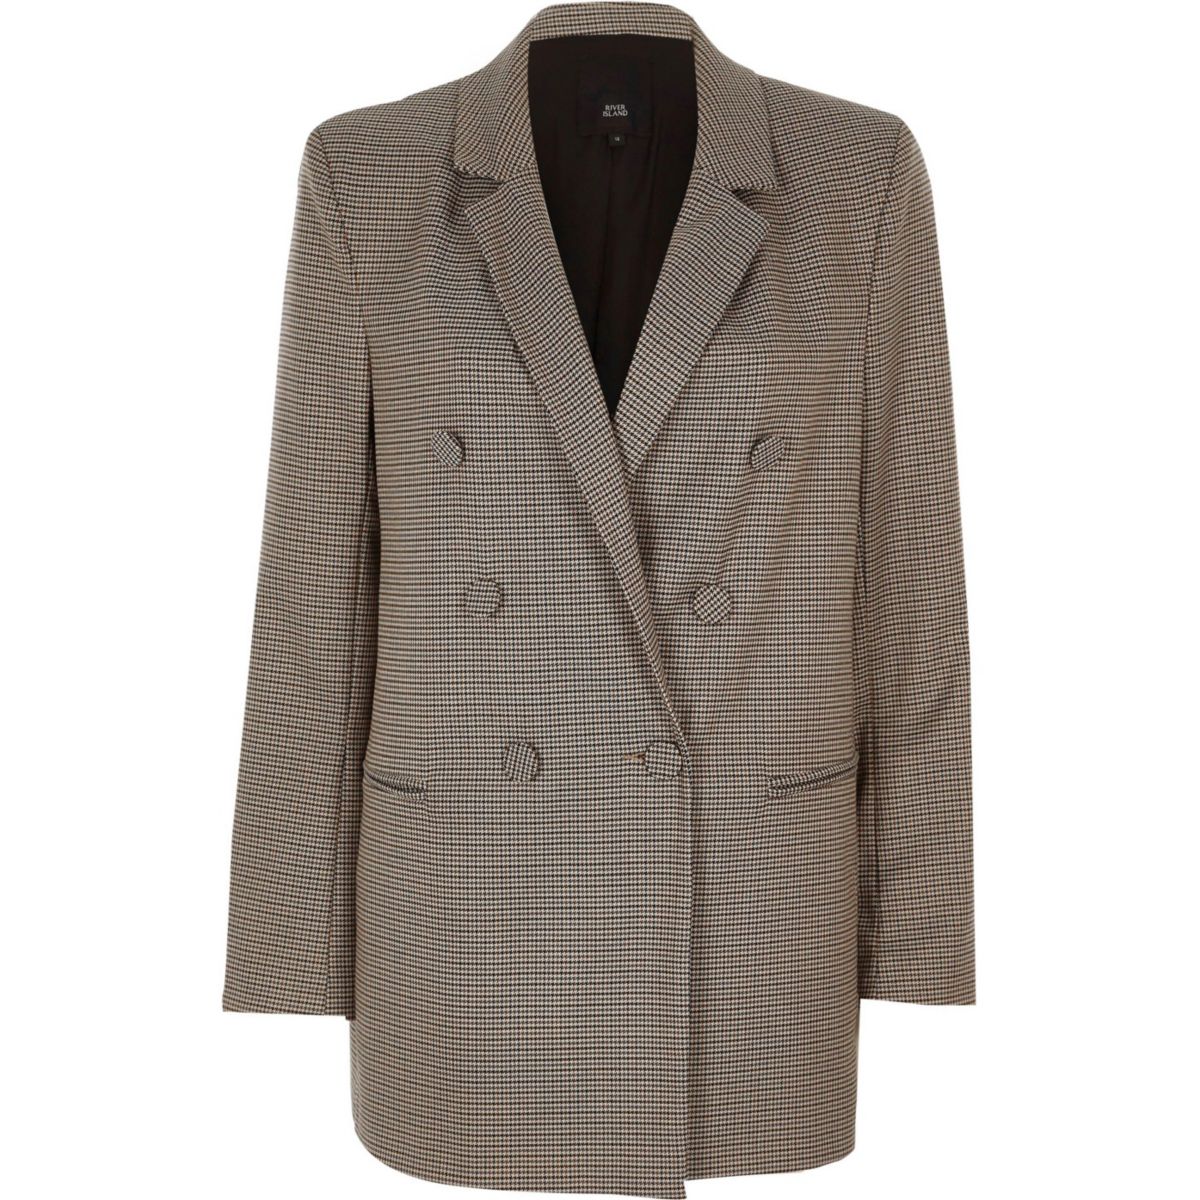 Styling oversized checked blazer | Chic Journal blog